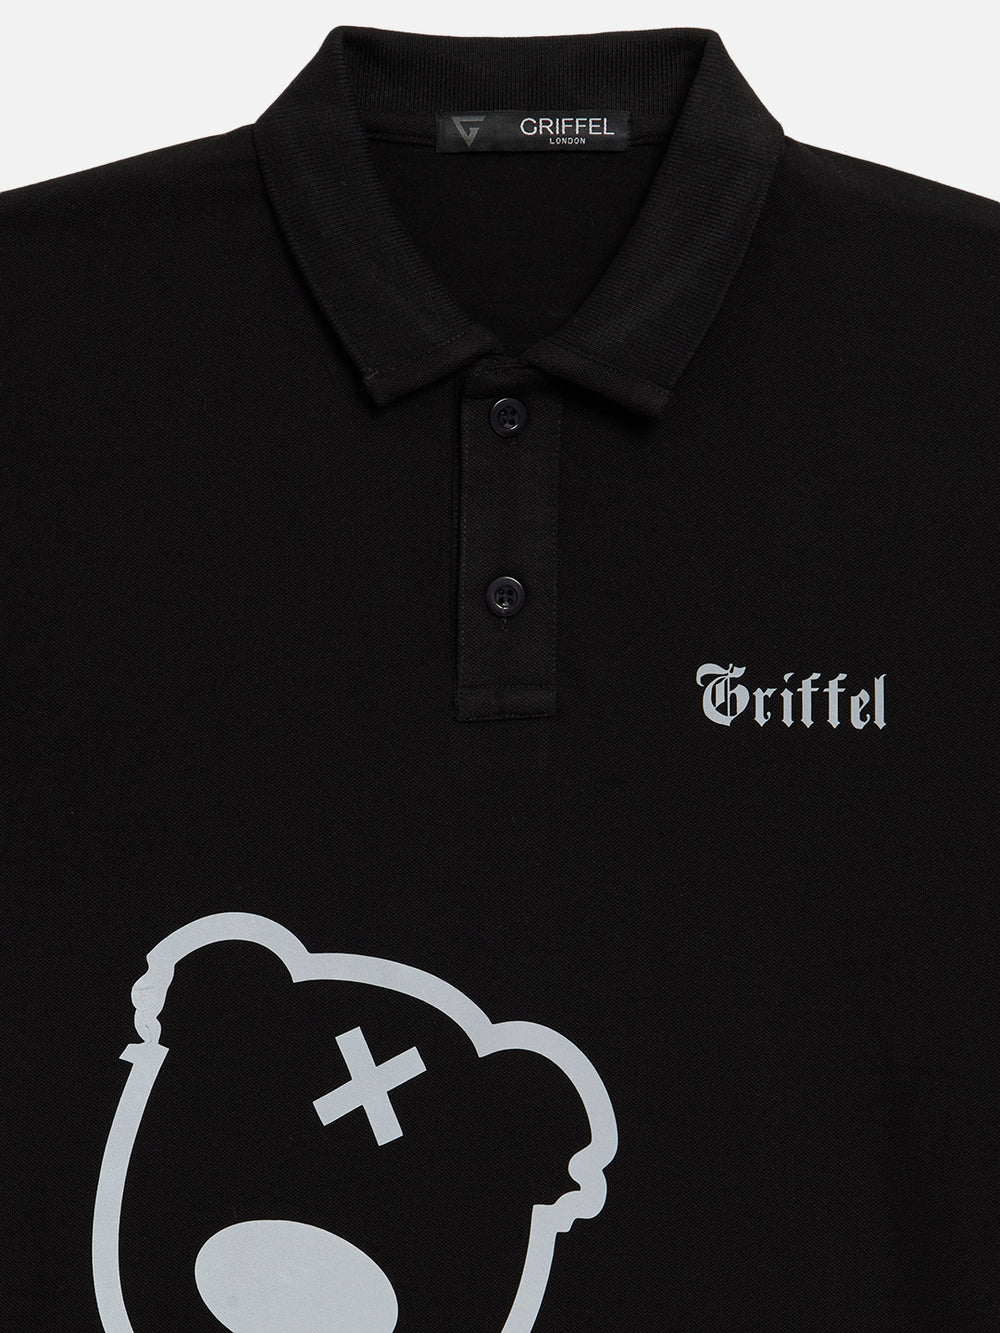 GRIFFEL Girls Kids Black Printed Polo T-shirt - griffel